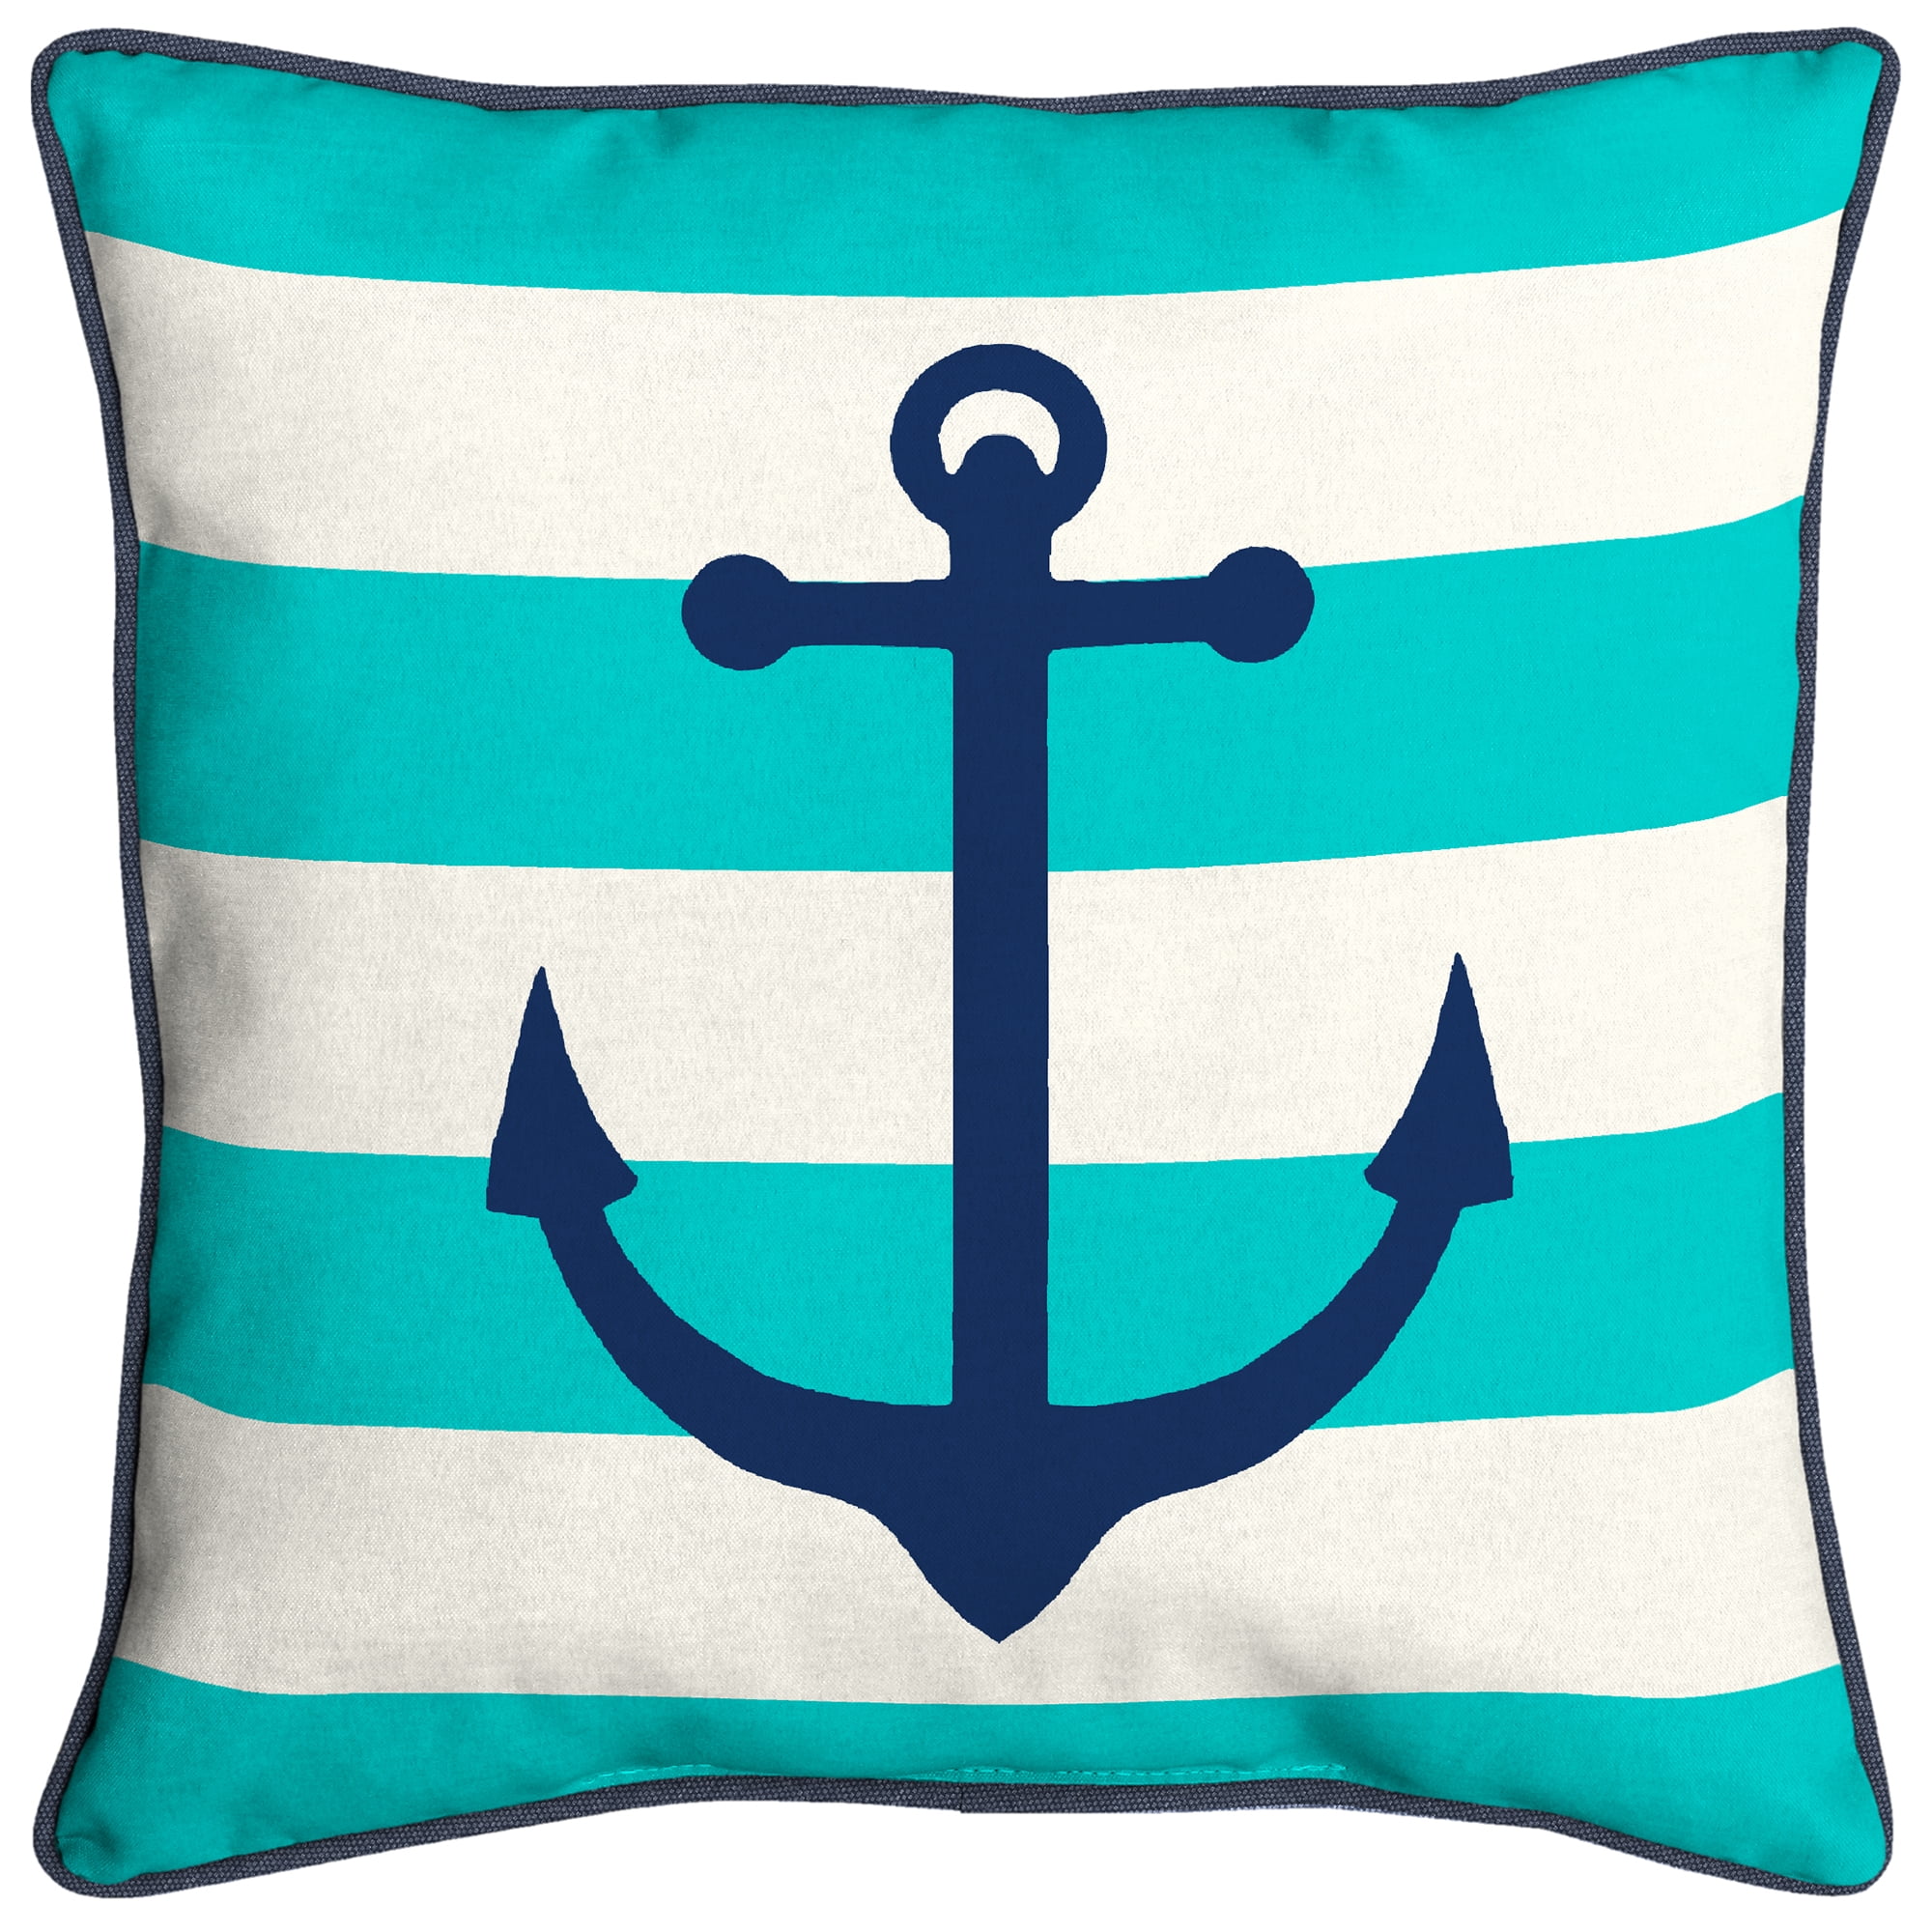 Modern Decorative Outdoor Throw Pillows Blue Stripes – Balanced Design